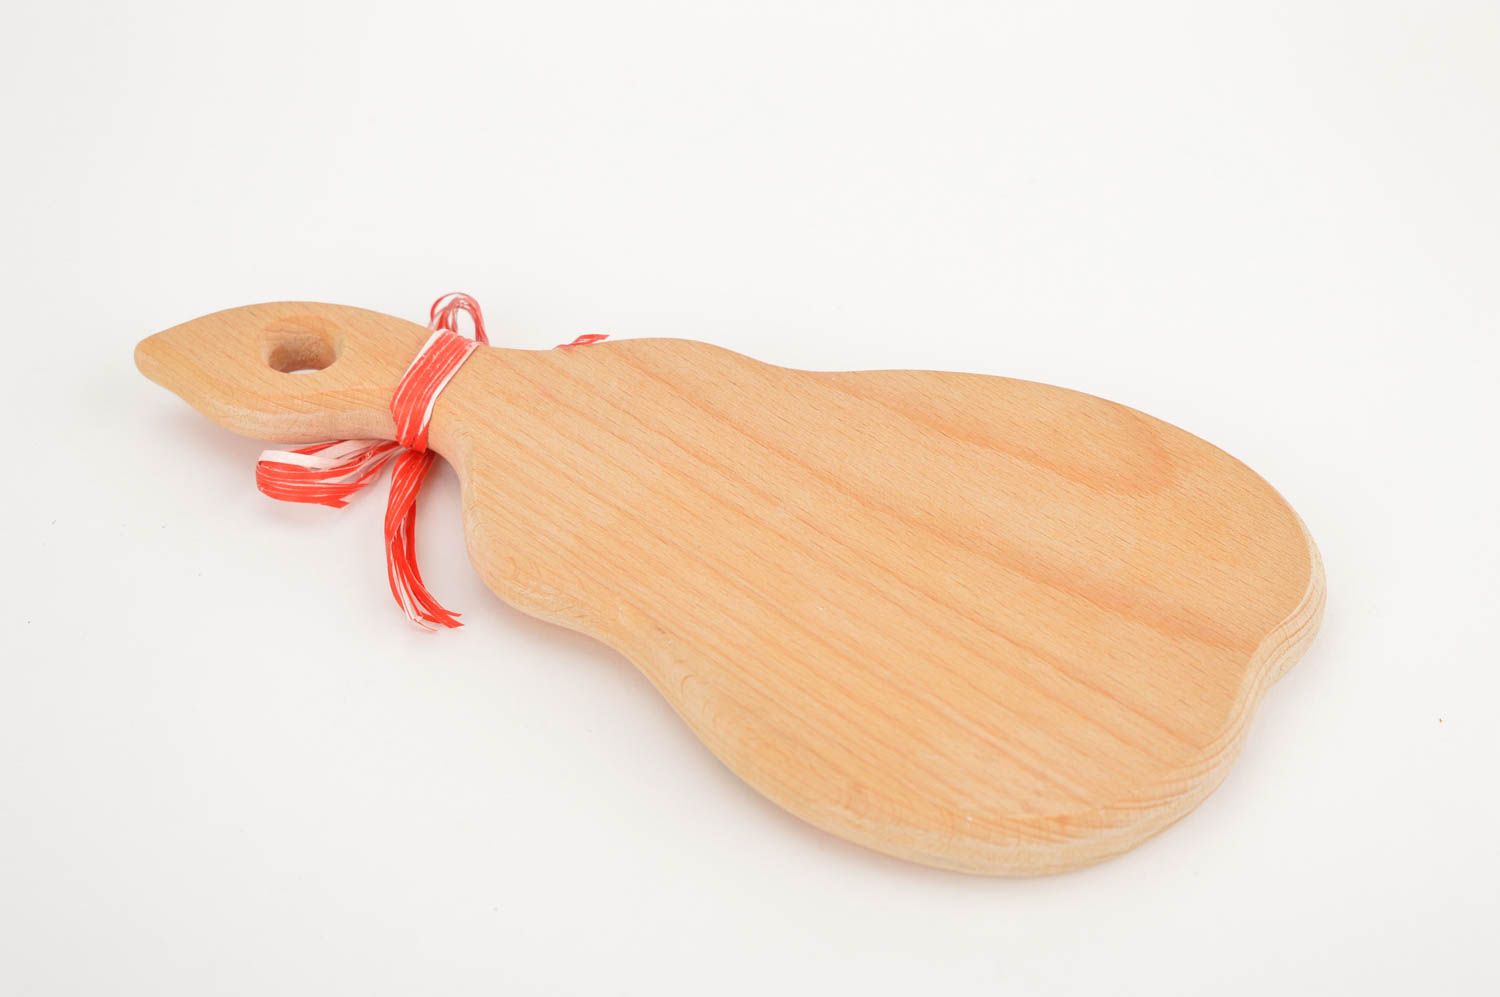 Handmade wooden chopping board decoupage ideas kitchen supplies small gifts photo 4